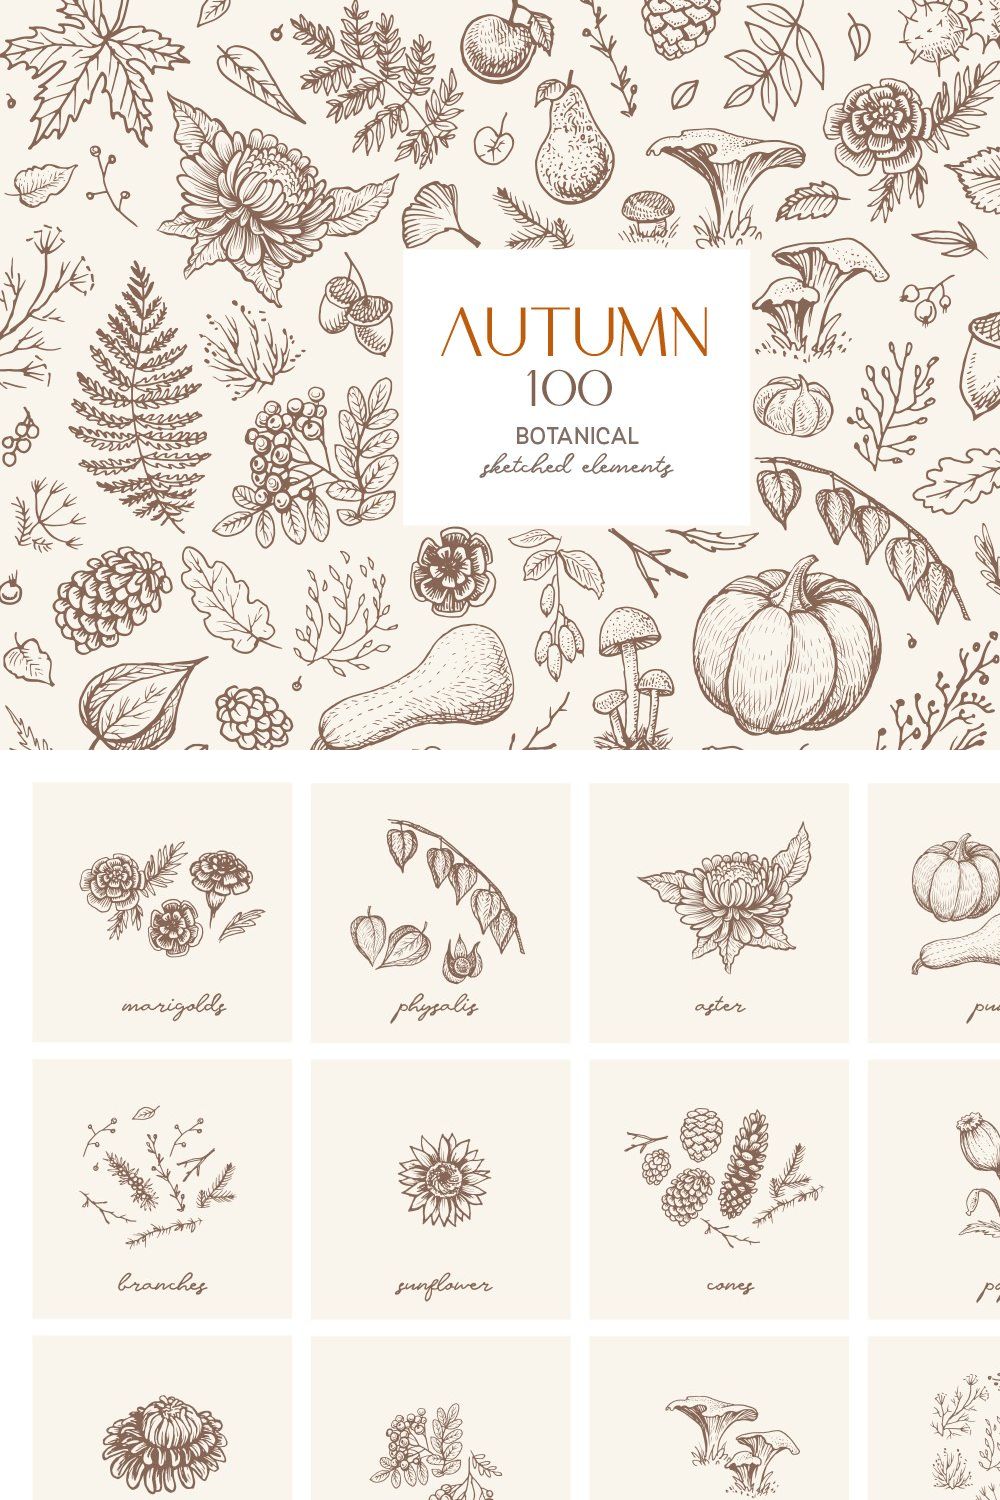 Autumn botanical sketches pinterest preview image.